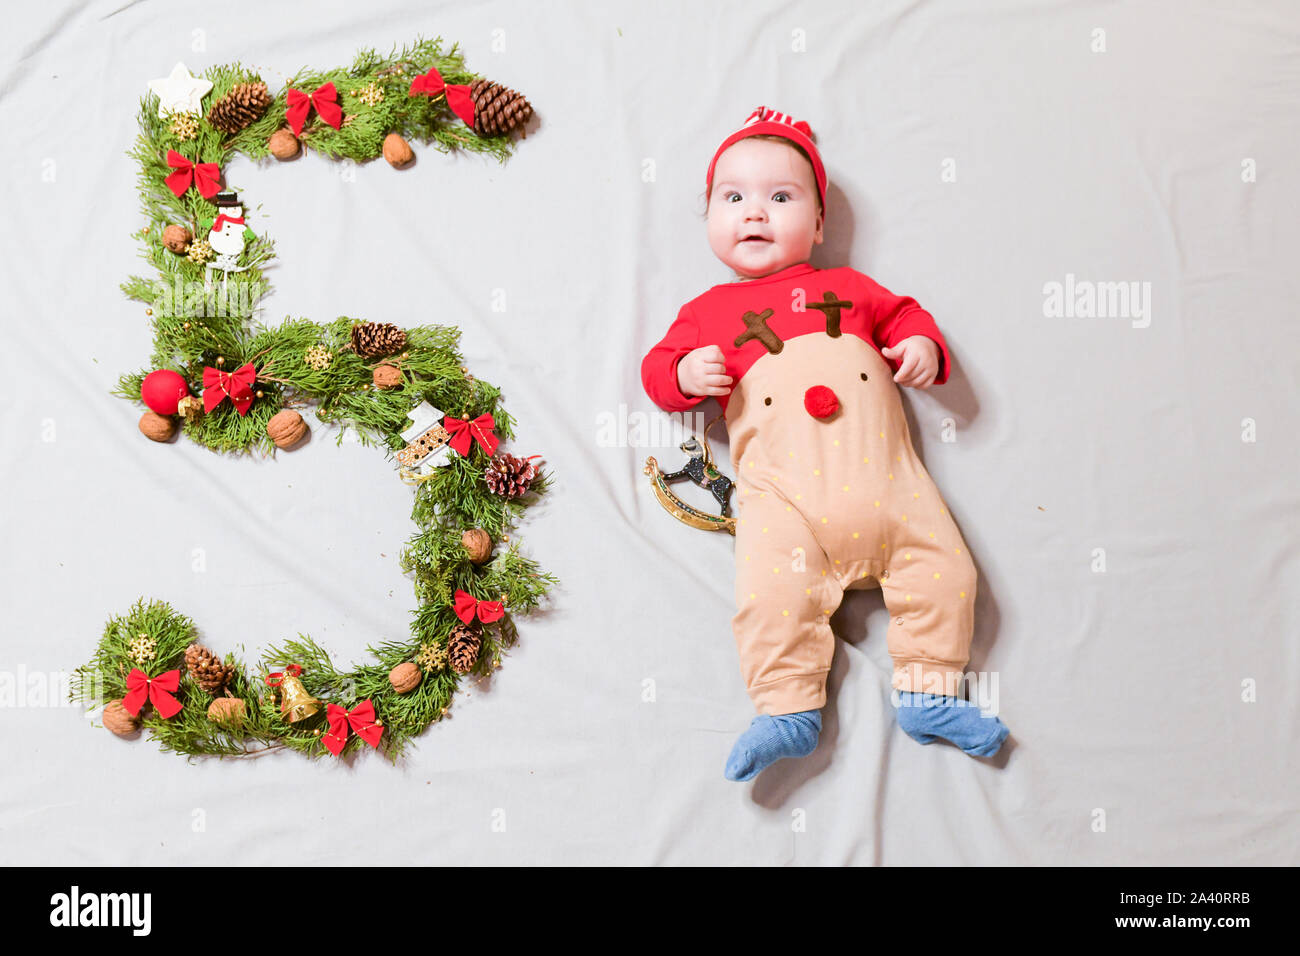 5 months. children's top view. 5 months cute baby portrait Stock Photo